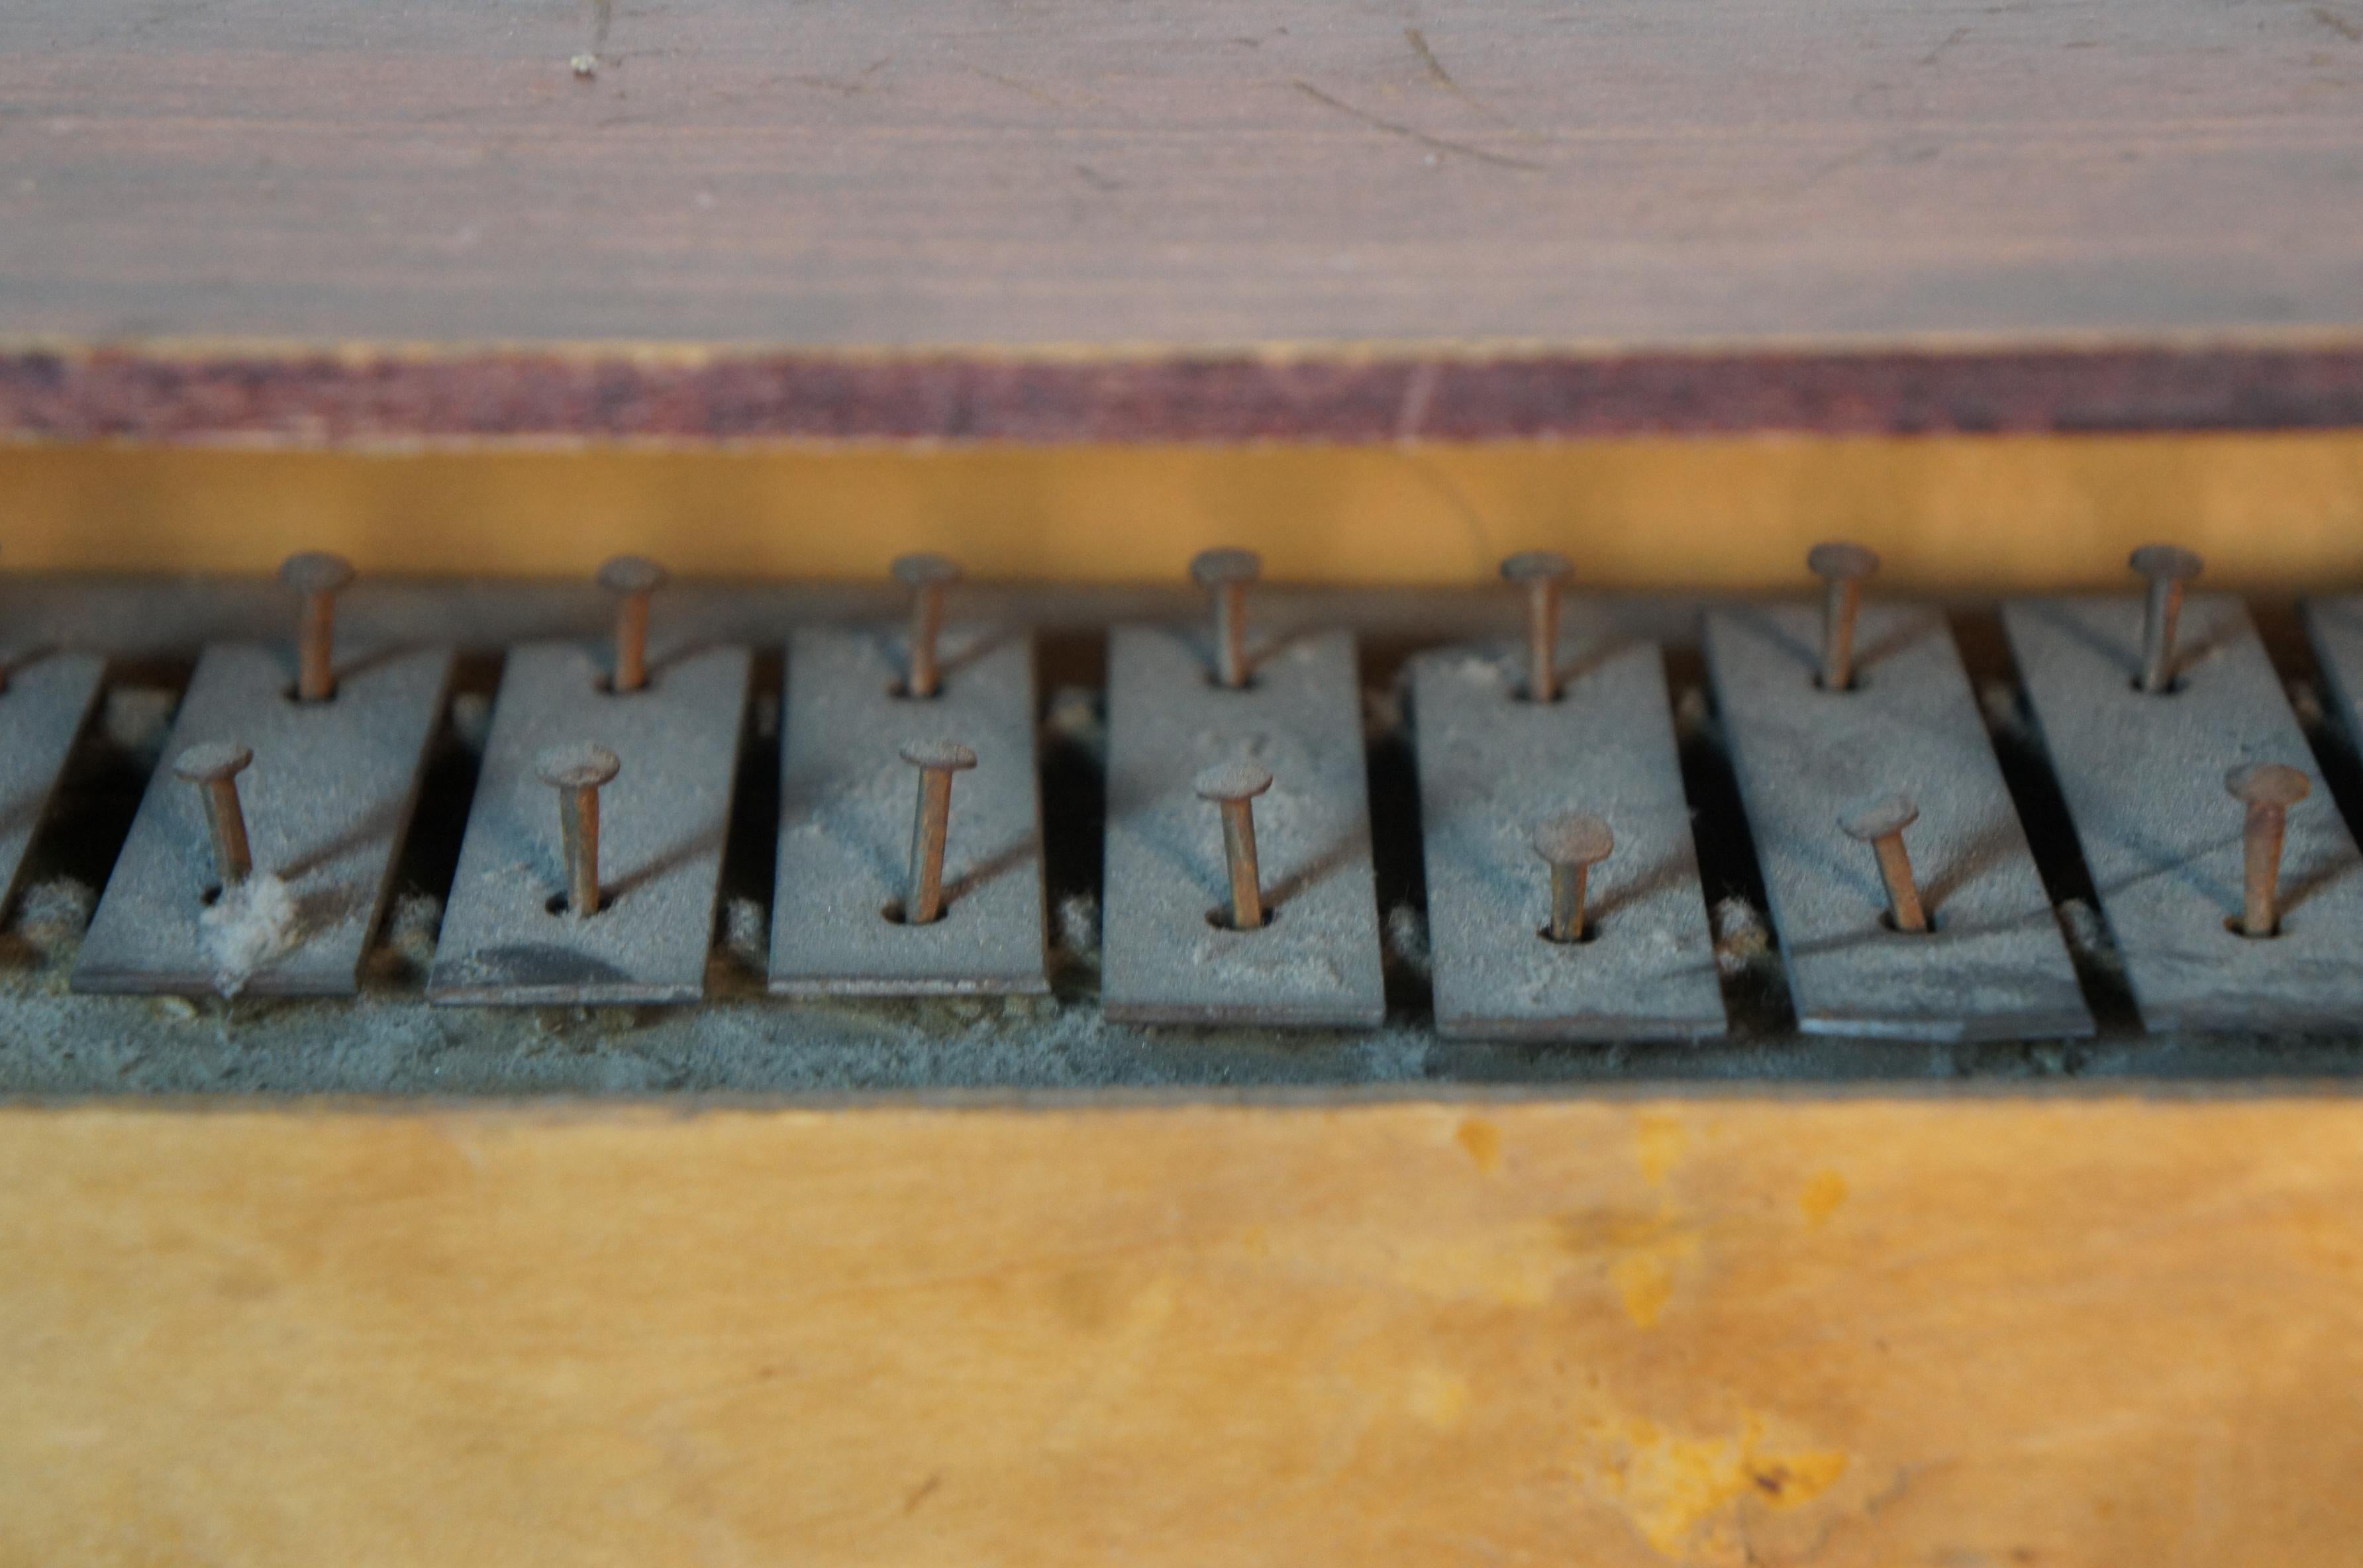 Hardwood Antique Schoenhut 16 Key Upright Toy Piano Neoclassical Cherubs Lithograph